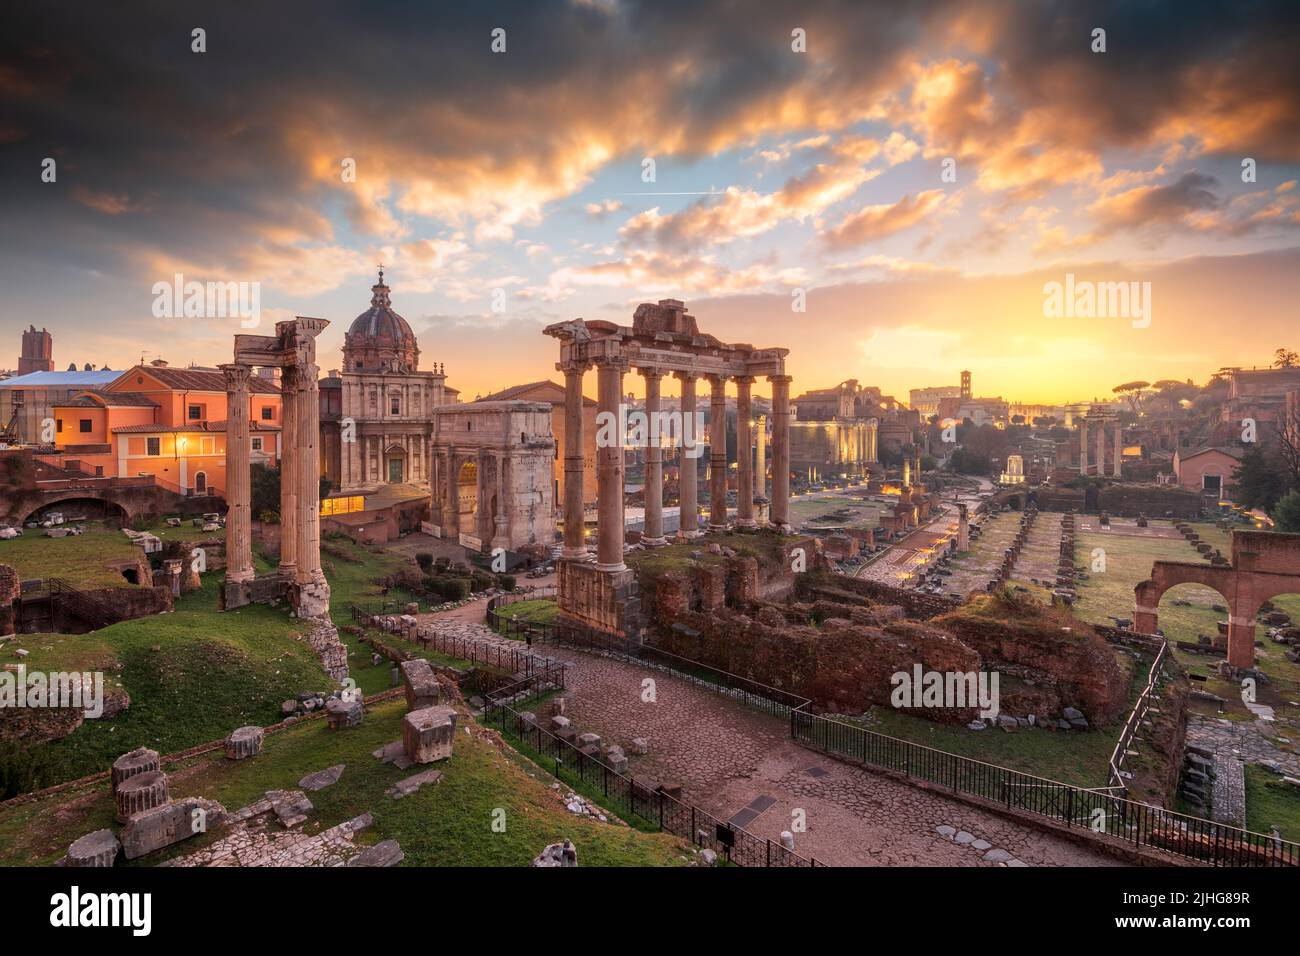 Rome, Italy at the historic Roman Forum ruins at dusk. Stock Photo